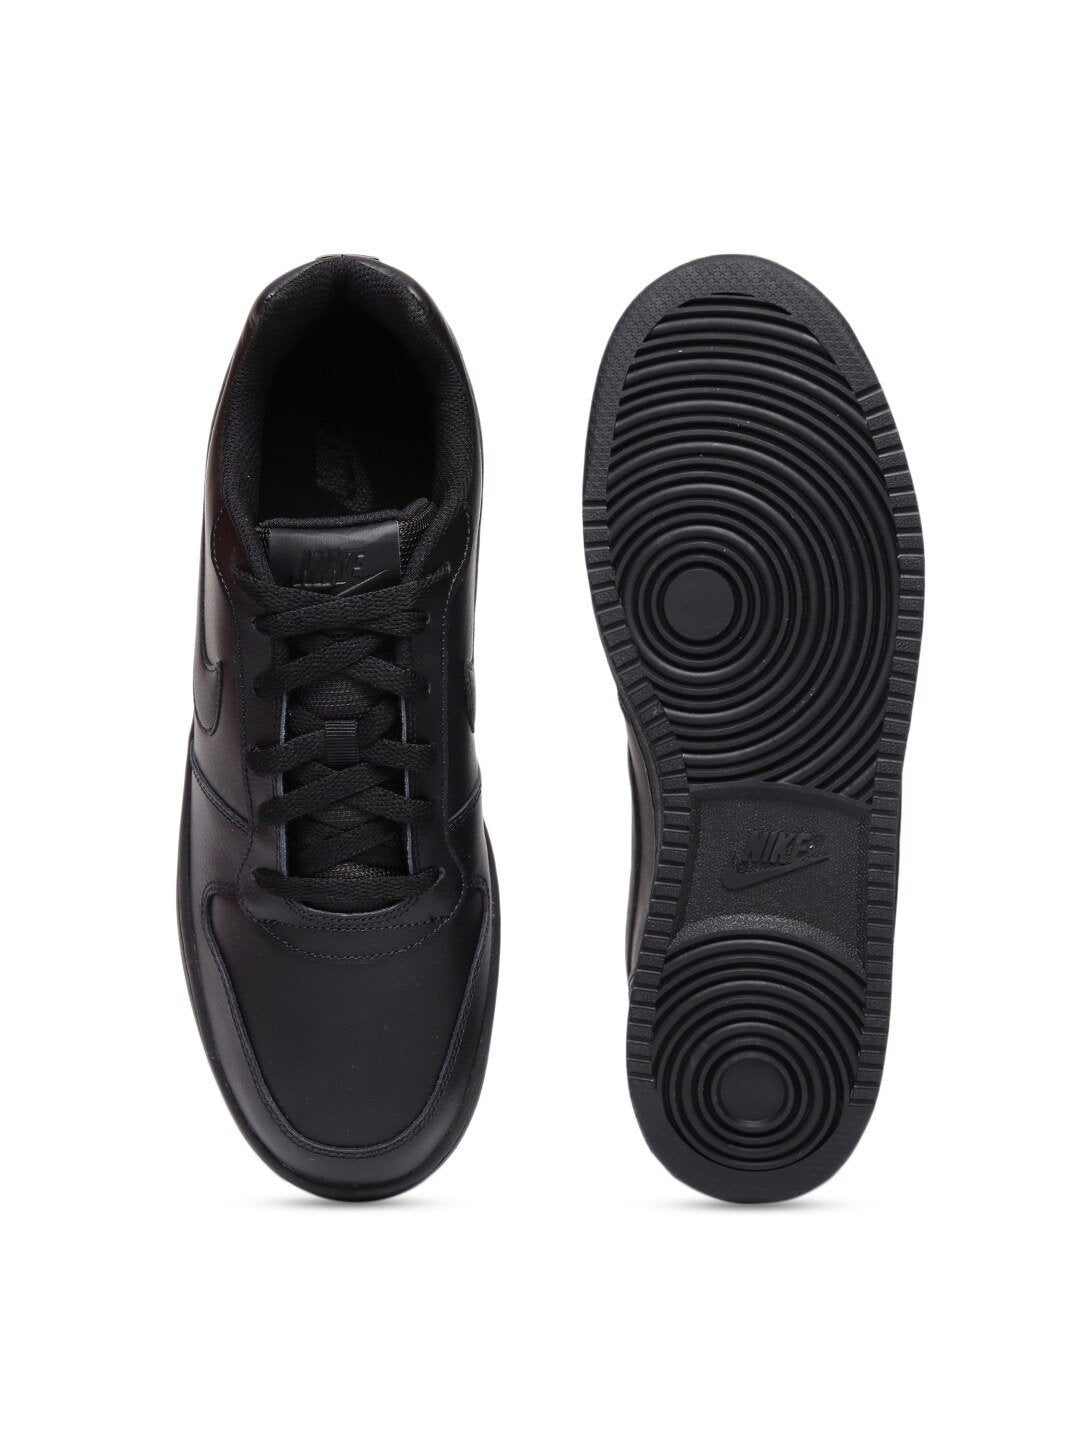 Men Black Ebernon Low Sneakers-Aq1775003